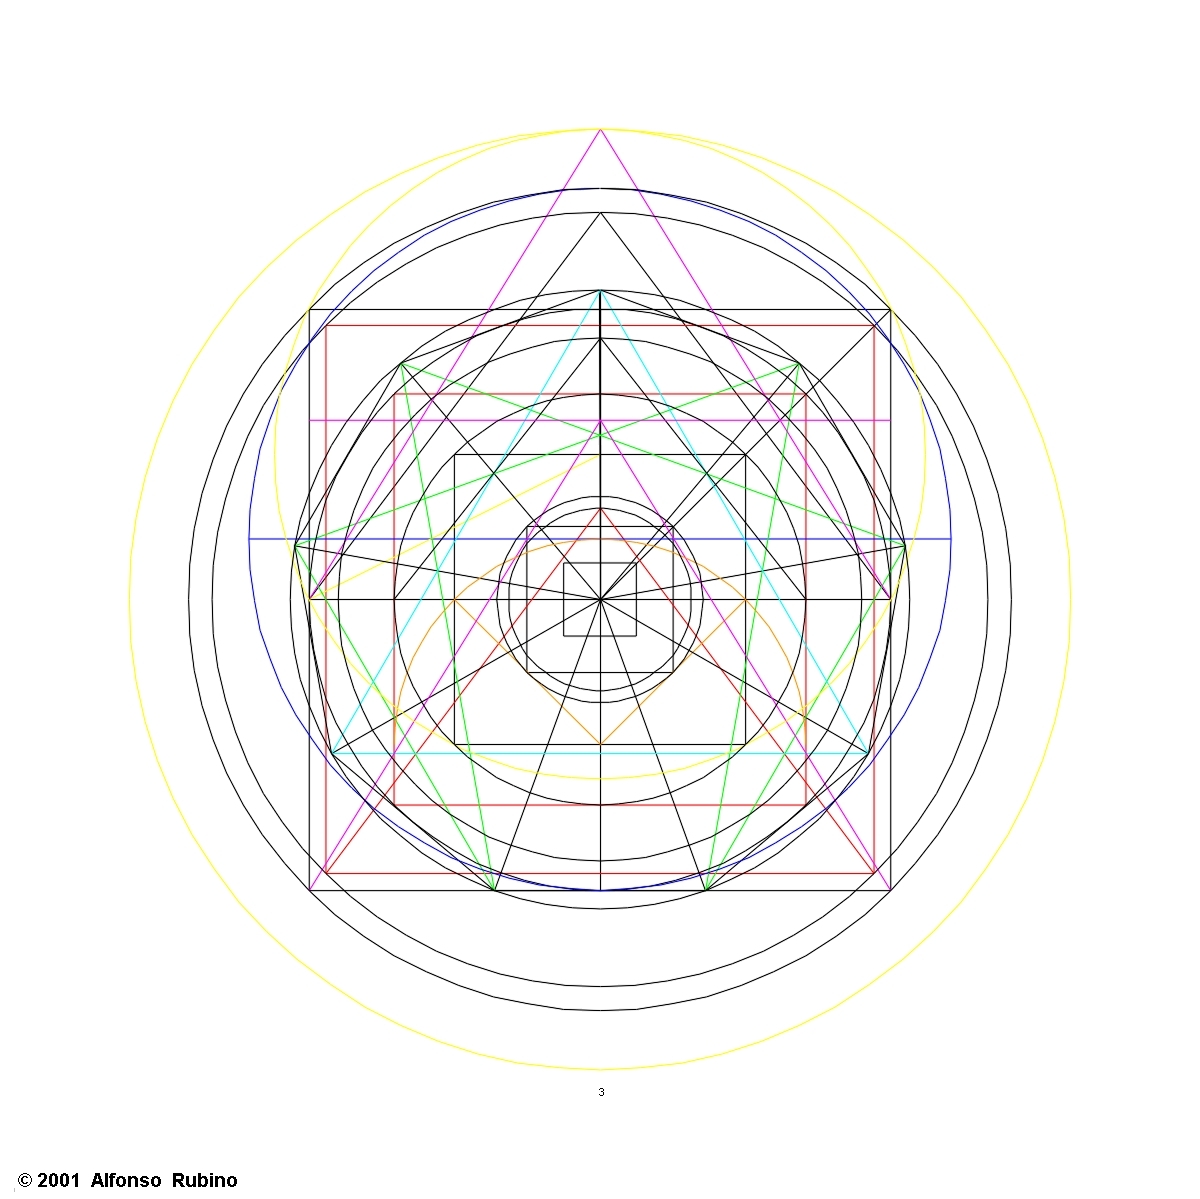 Geometric Analysis of the Aztec Sundial - Part 3 by Alfonso Rubino